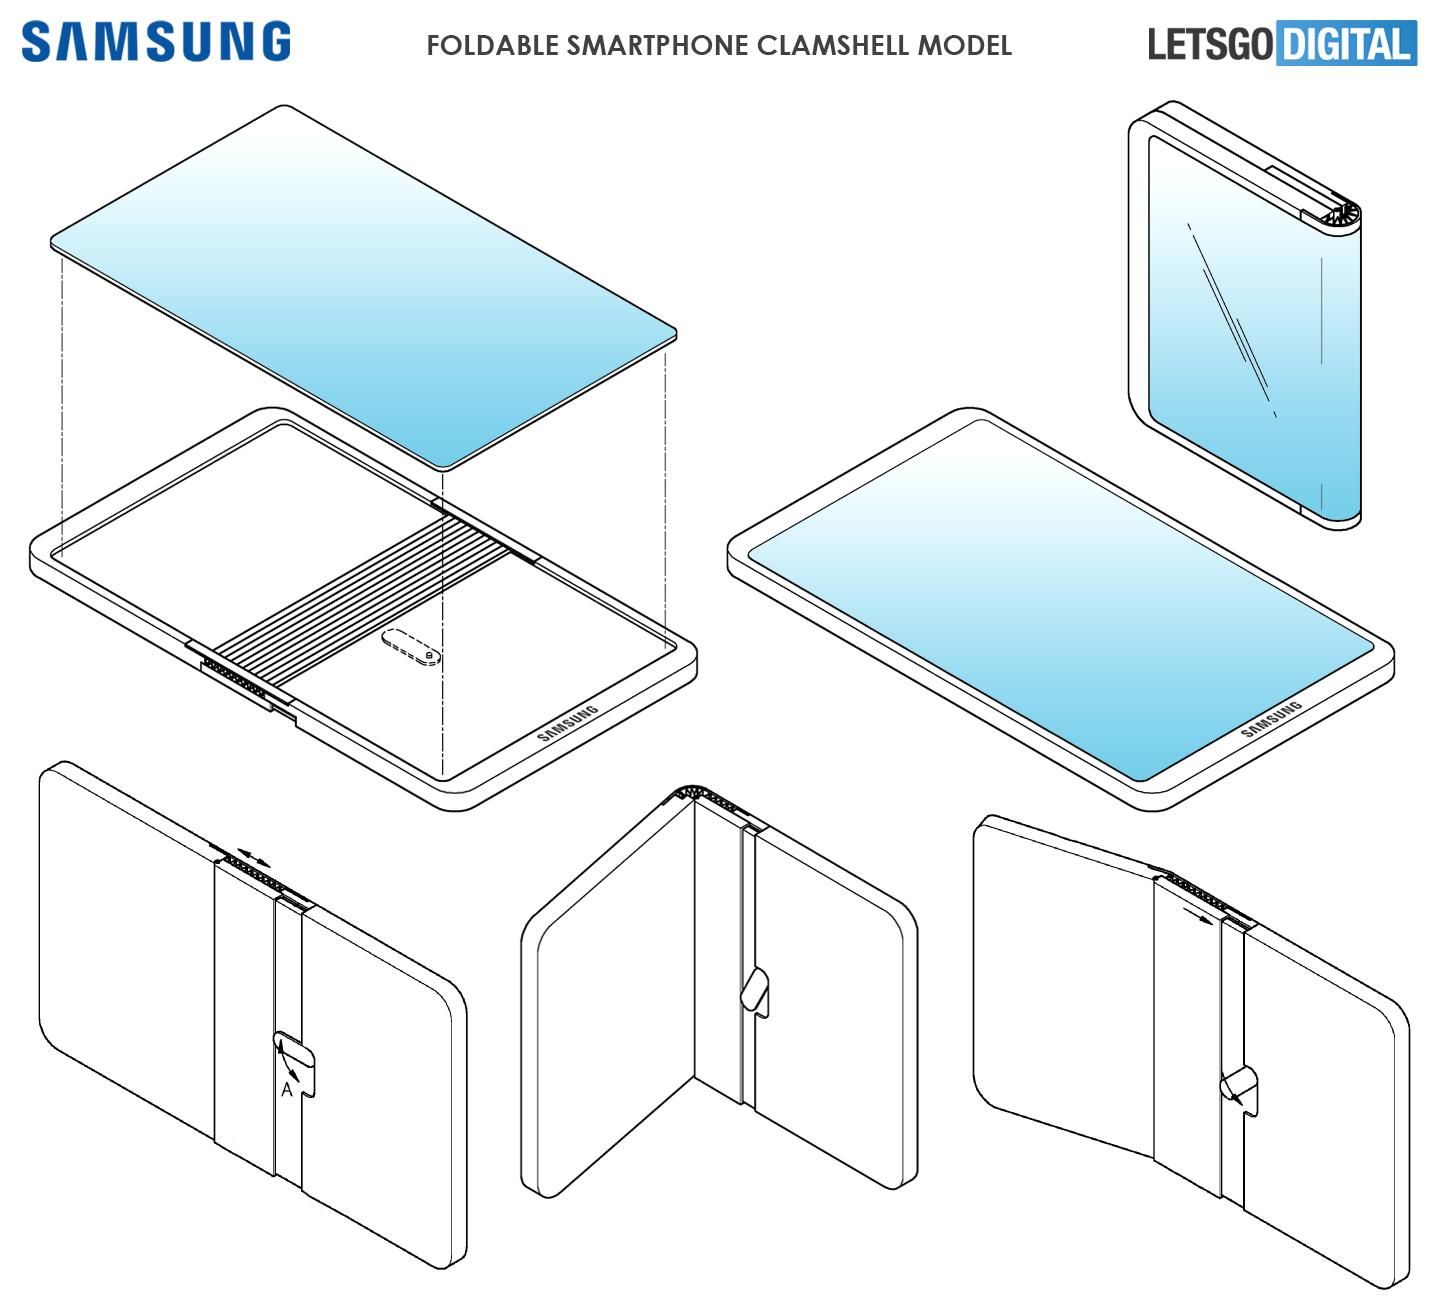 Samsung clamshell foldable smartphone